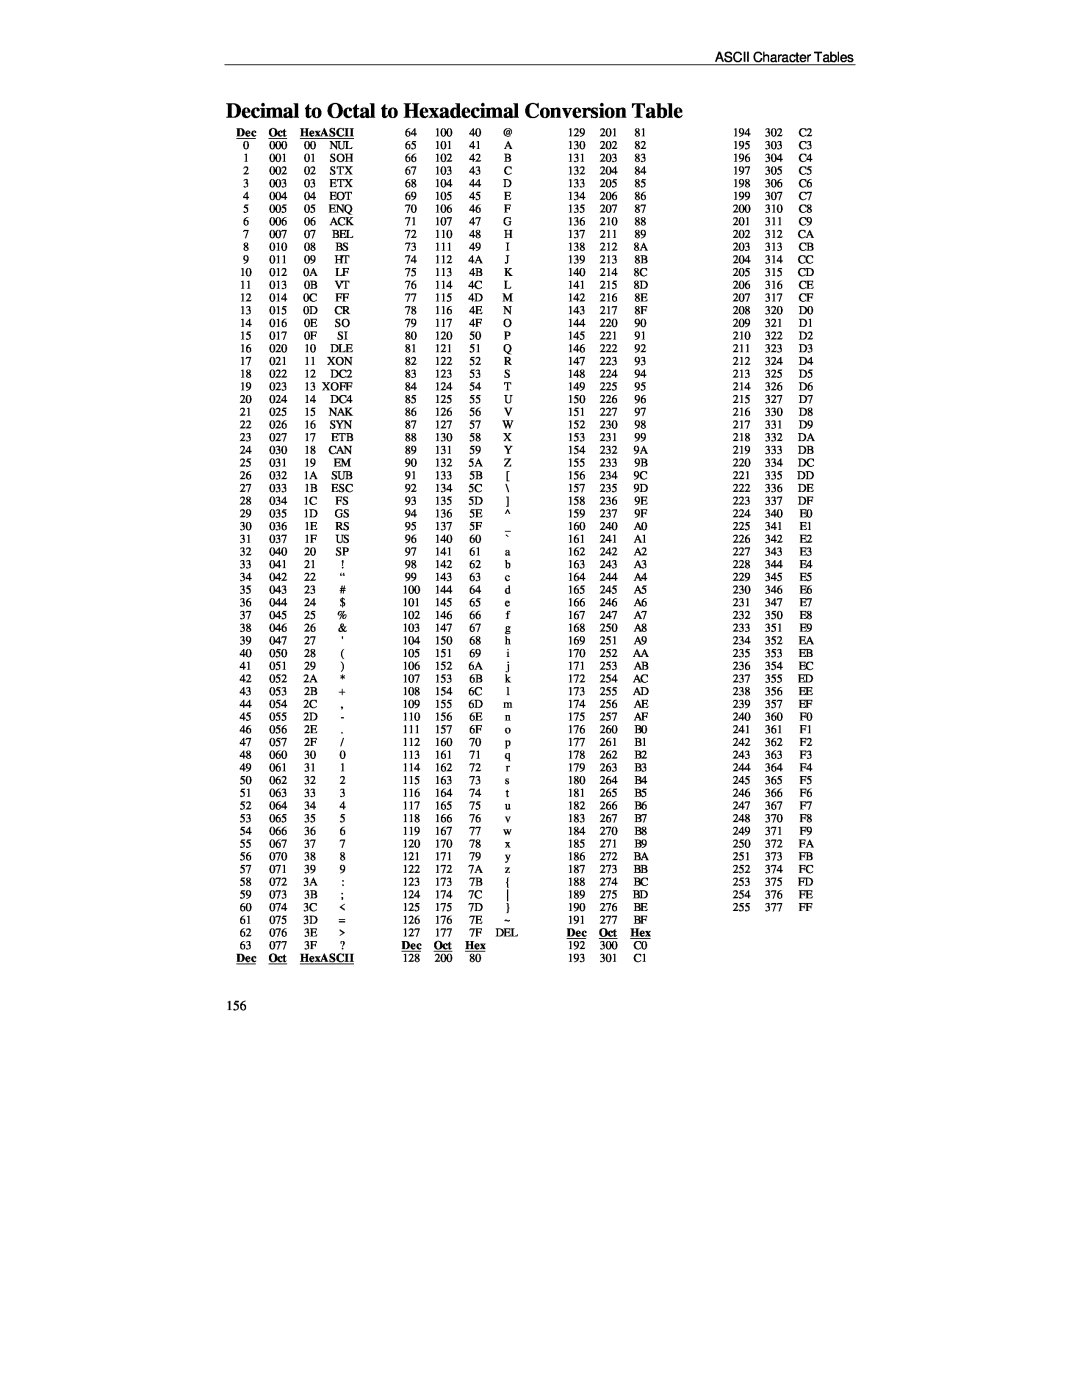 Printek PrintMaster 850 Series manual Decimal to Octal to Hexadecimal Conversion Table, ASCII Character Tables, HexASCII 